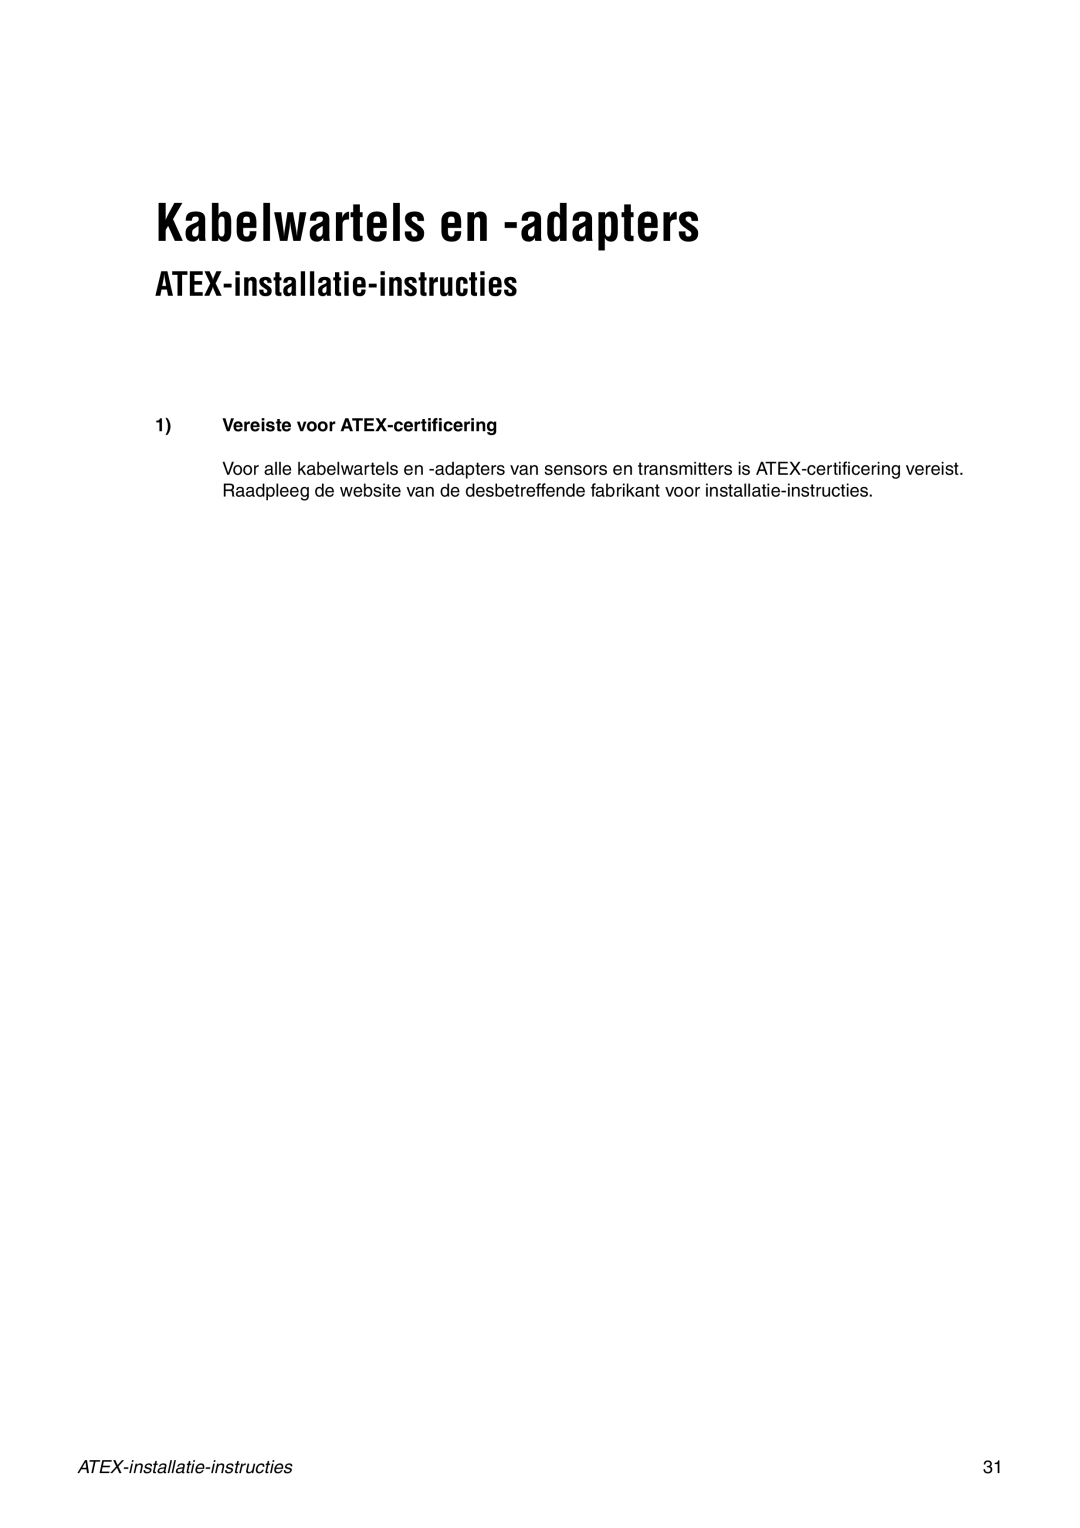 Emerson Process Management MMI-20010080 manual Kabelwartels en -adapters, ATEX-installatie-instructies 